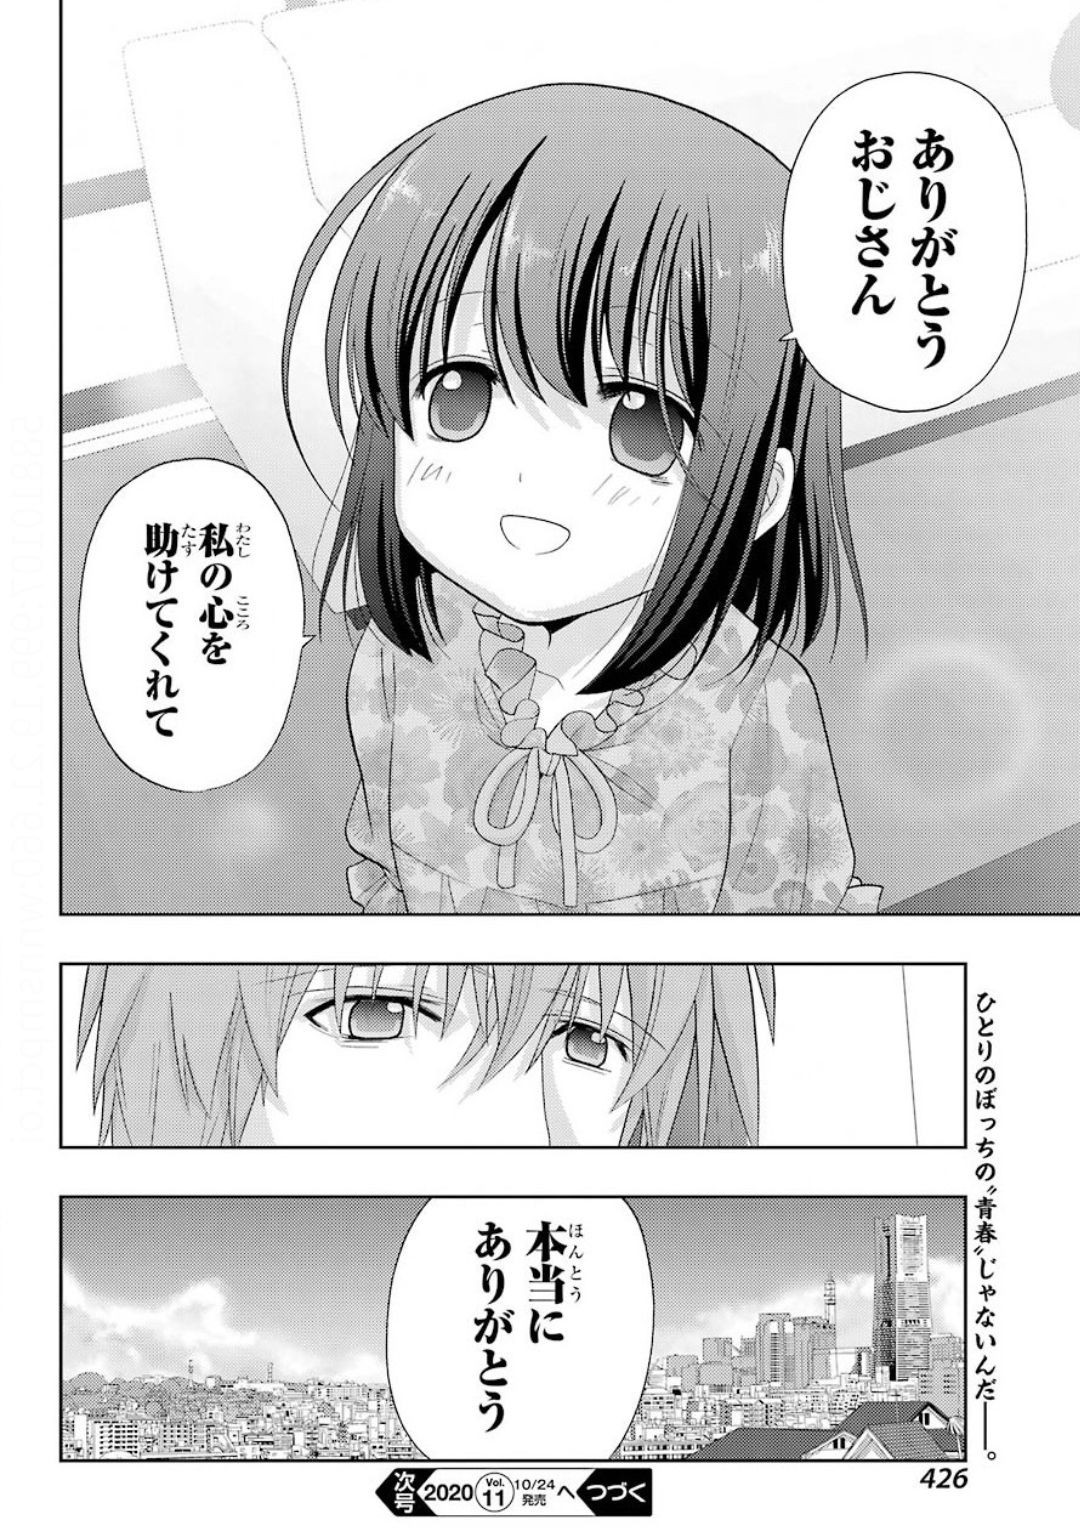 Shinohayu - The Dawn of Age Manga - Chapter 082 - Page 24